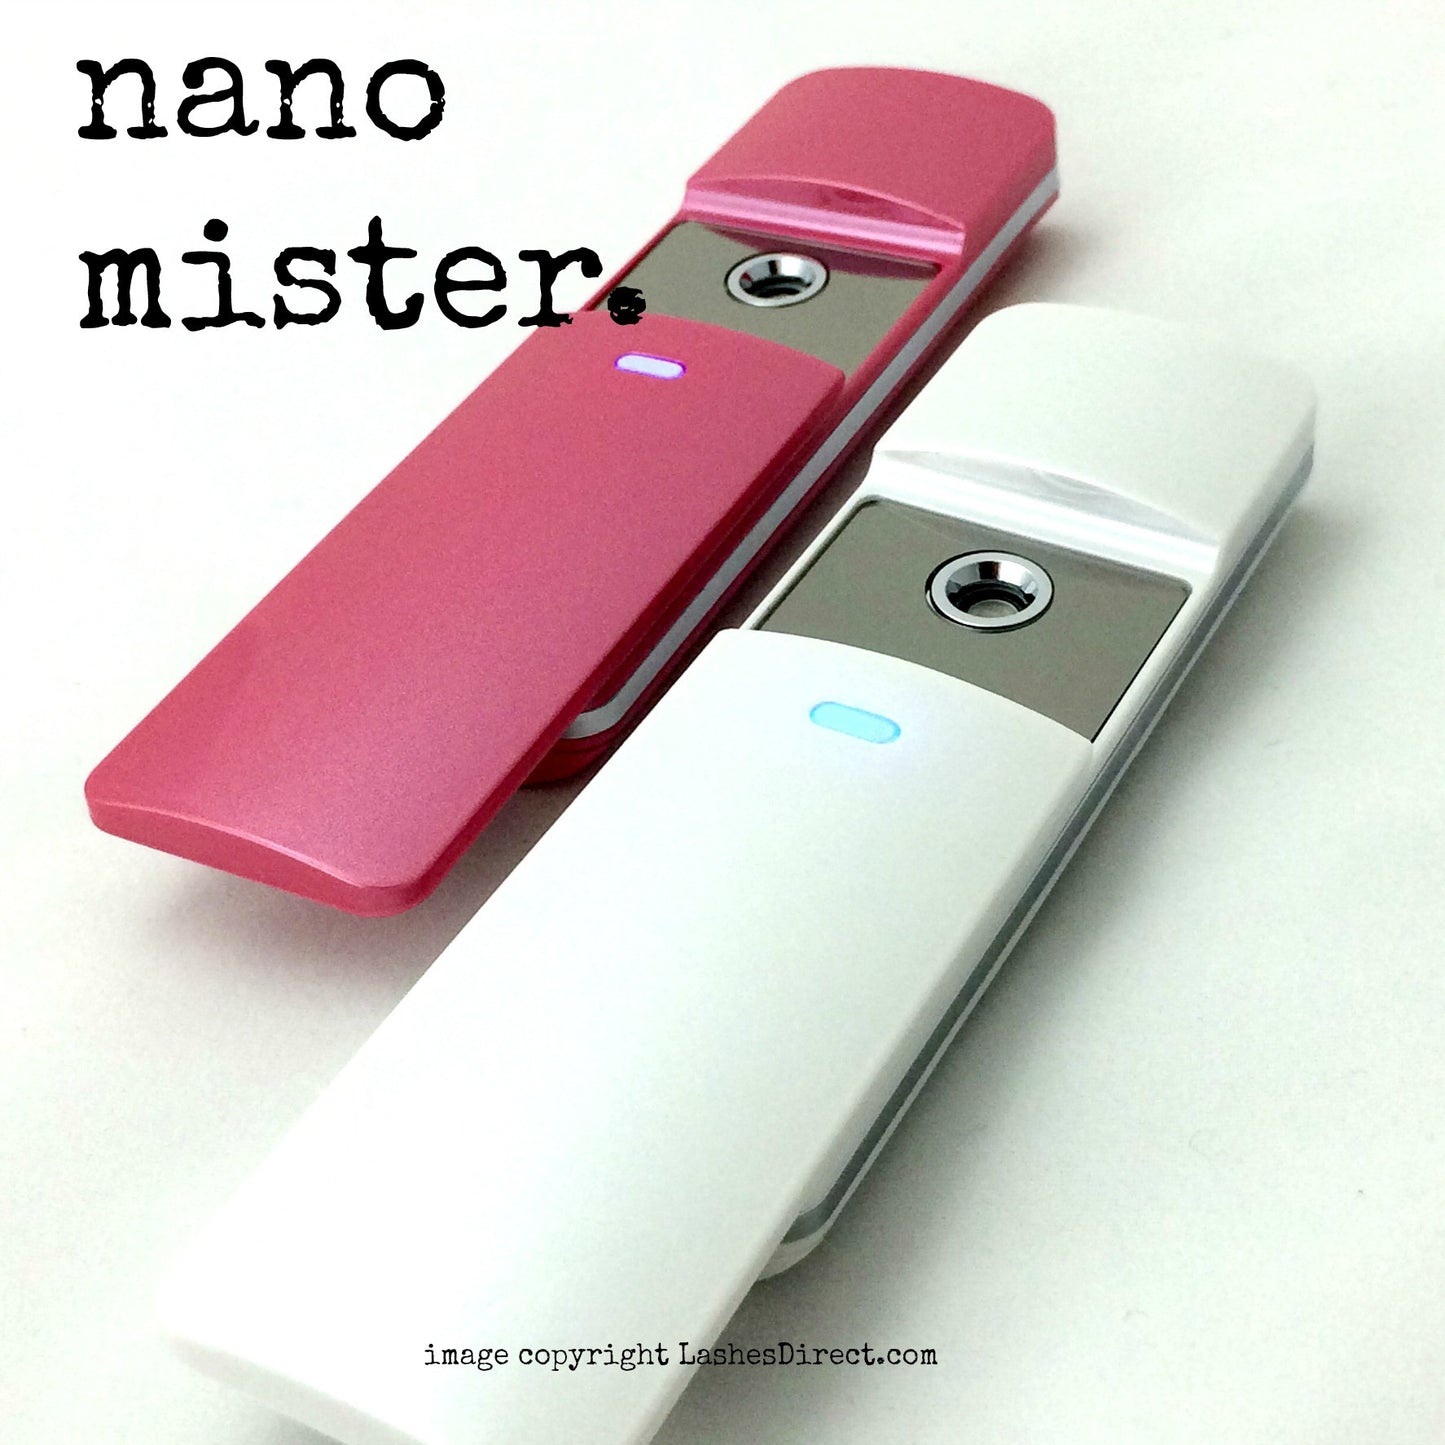 Nano Mister used to cure eyelash extension adhesives / glues.